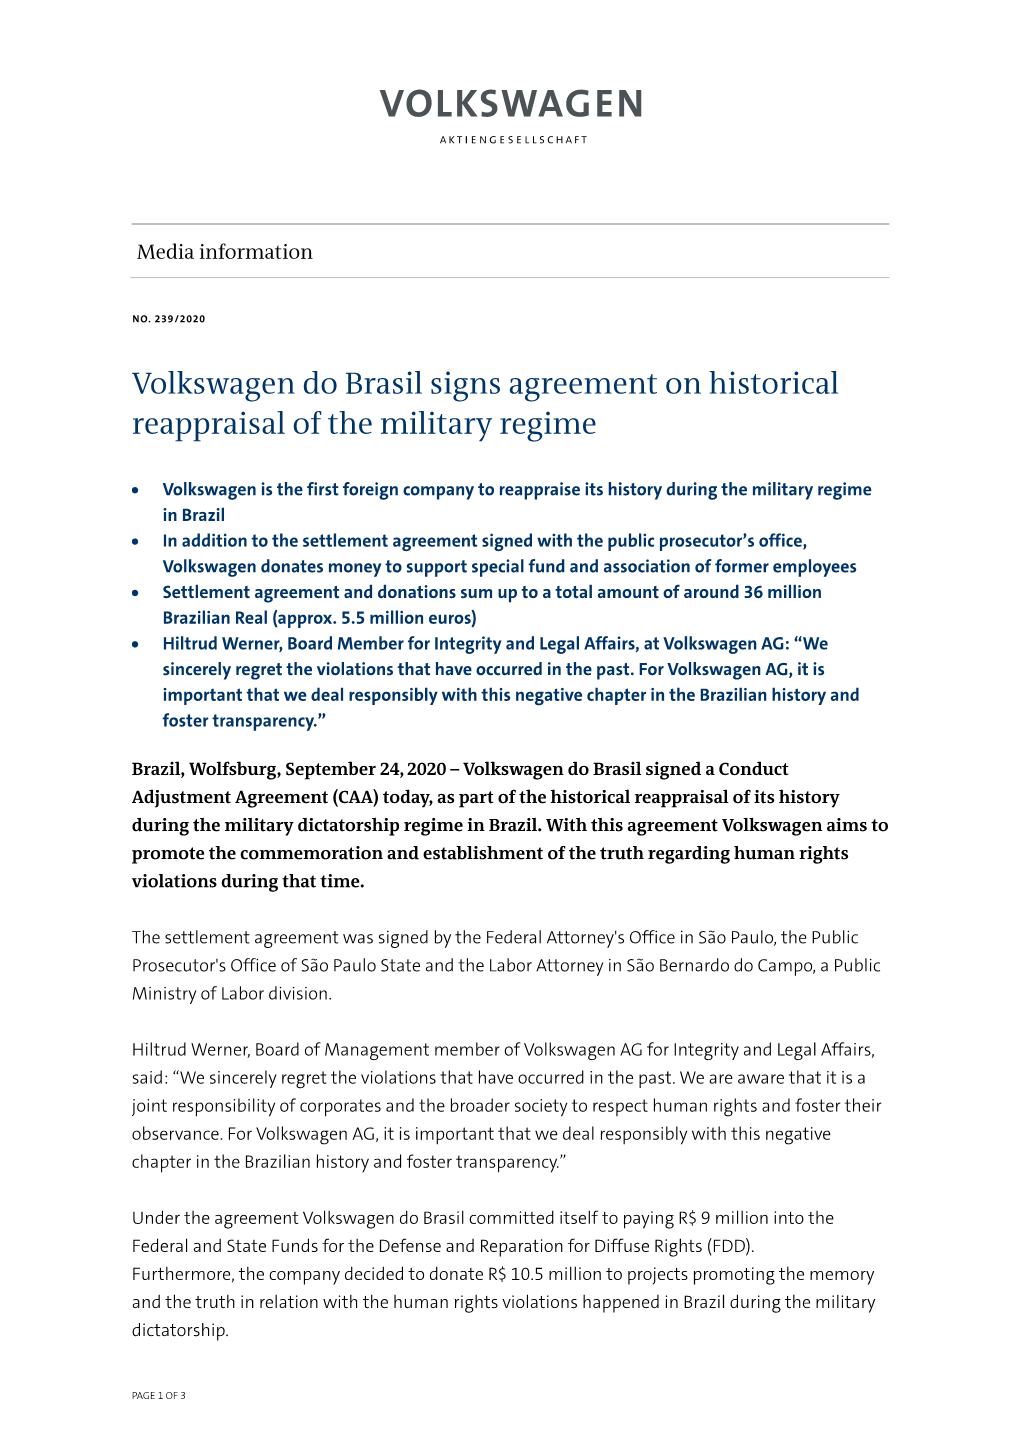 Volkswagen Do Brasil Signs Agreement on Historical Reappraisal of the Military Regime